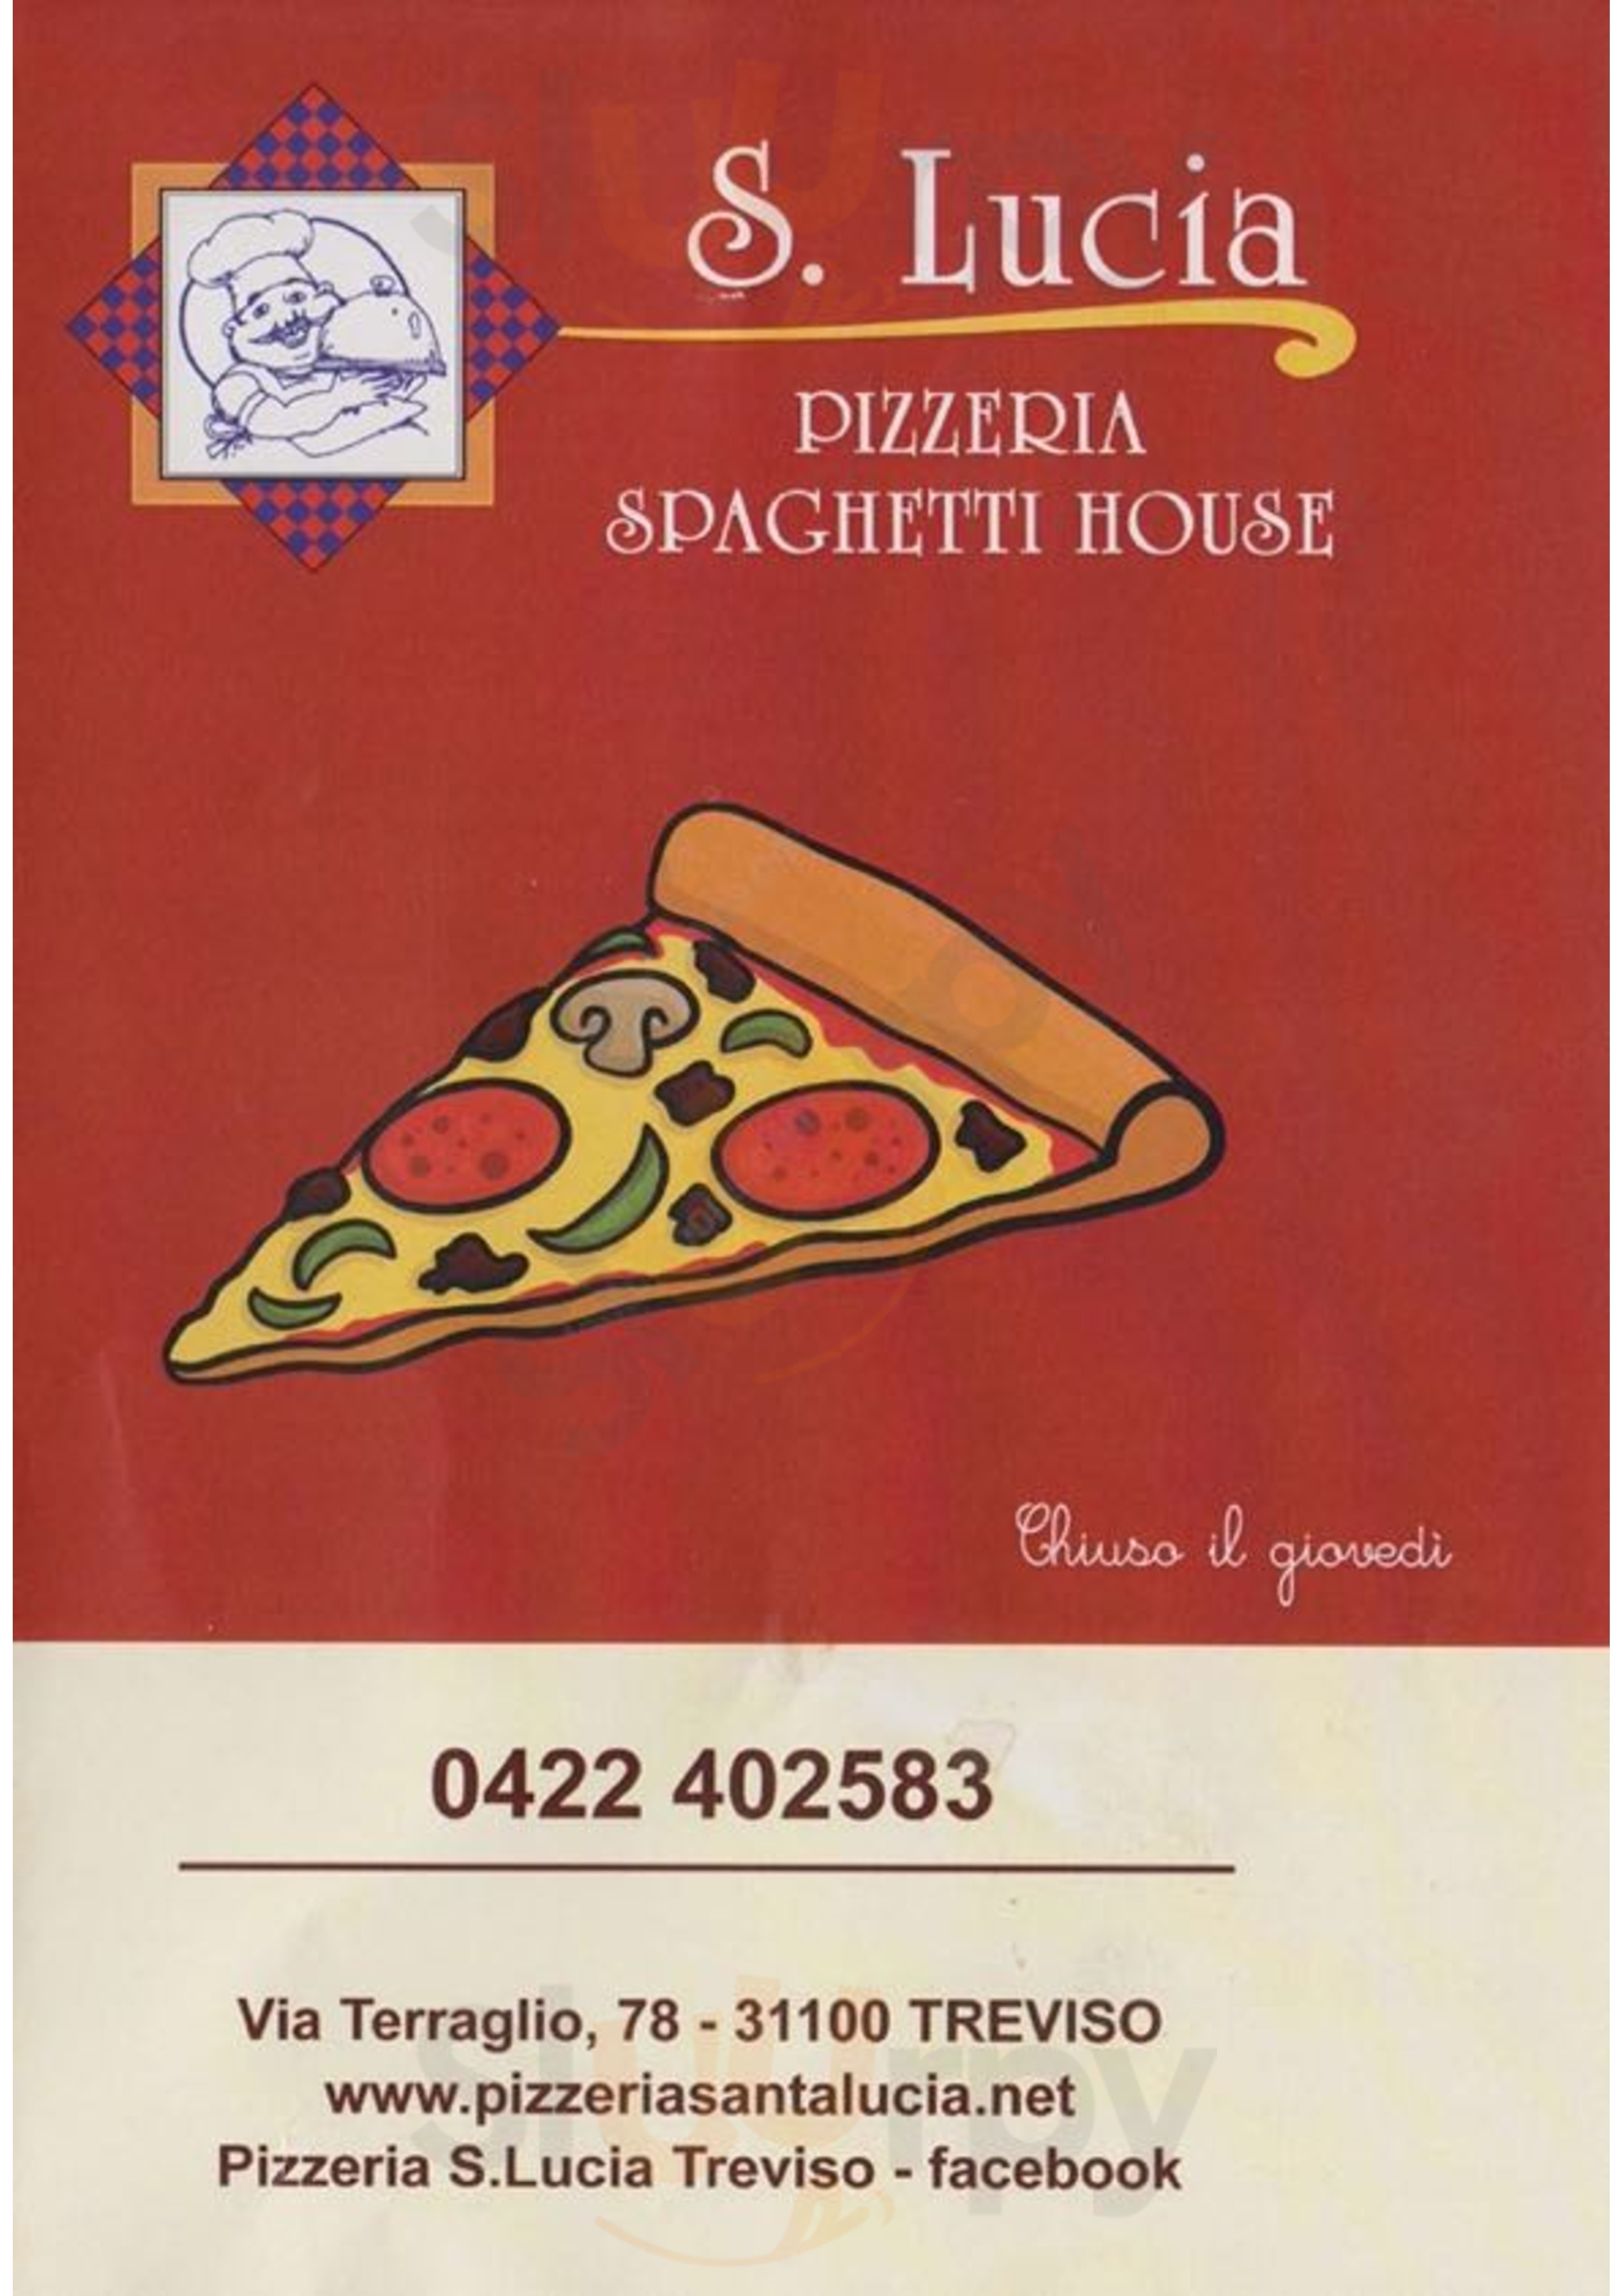 Pizzeria Santa Lucia - Spaghetti House Treviso menù 1 pagina